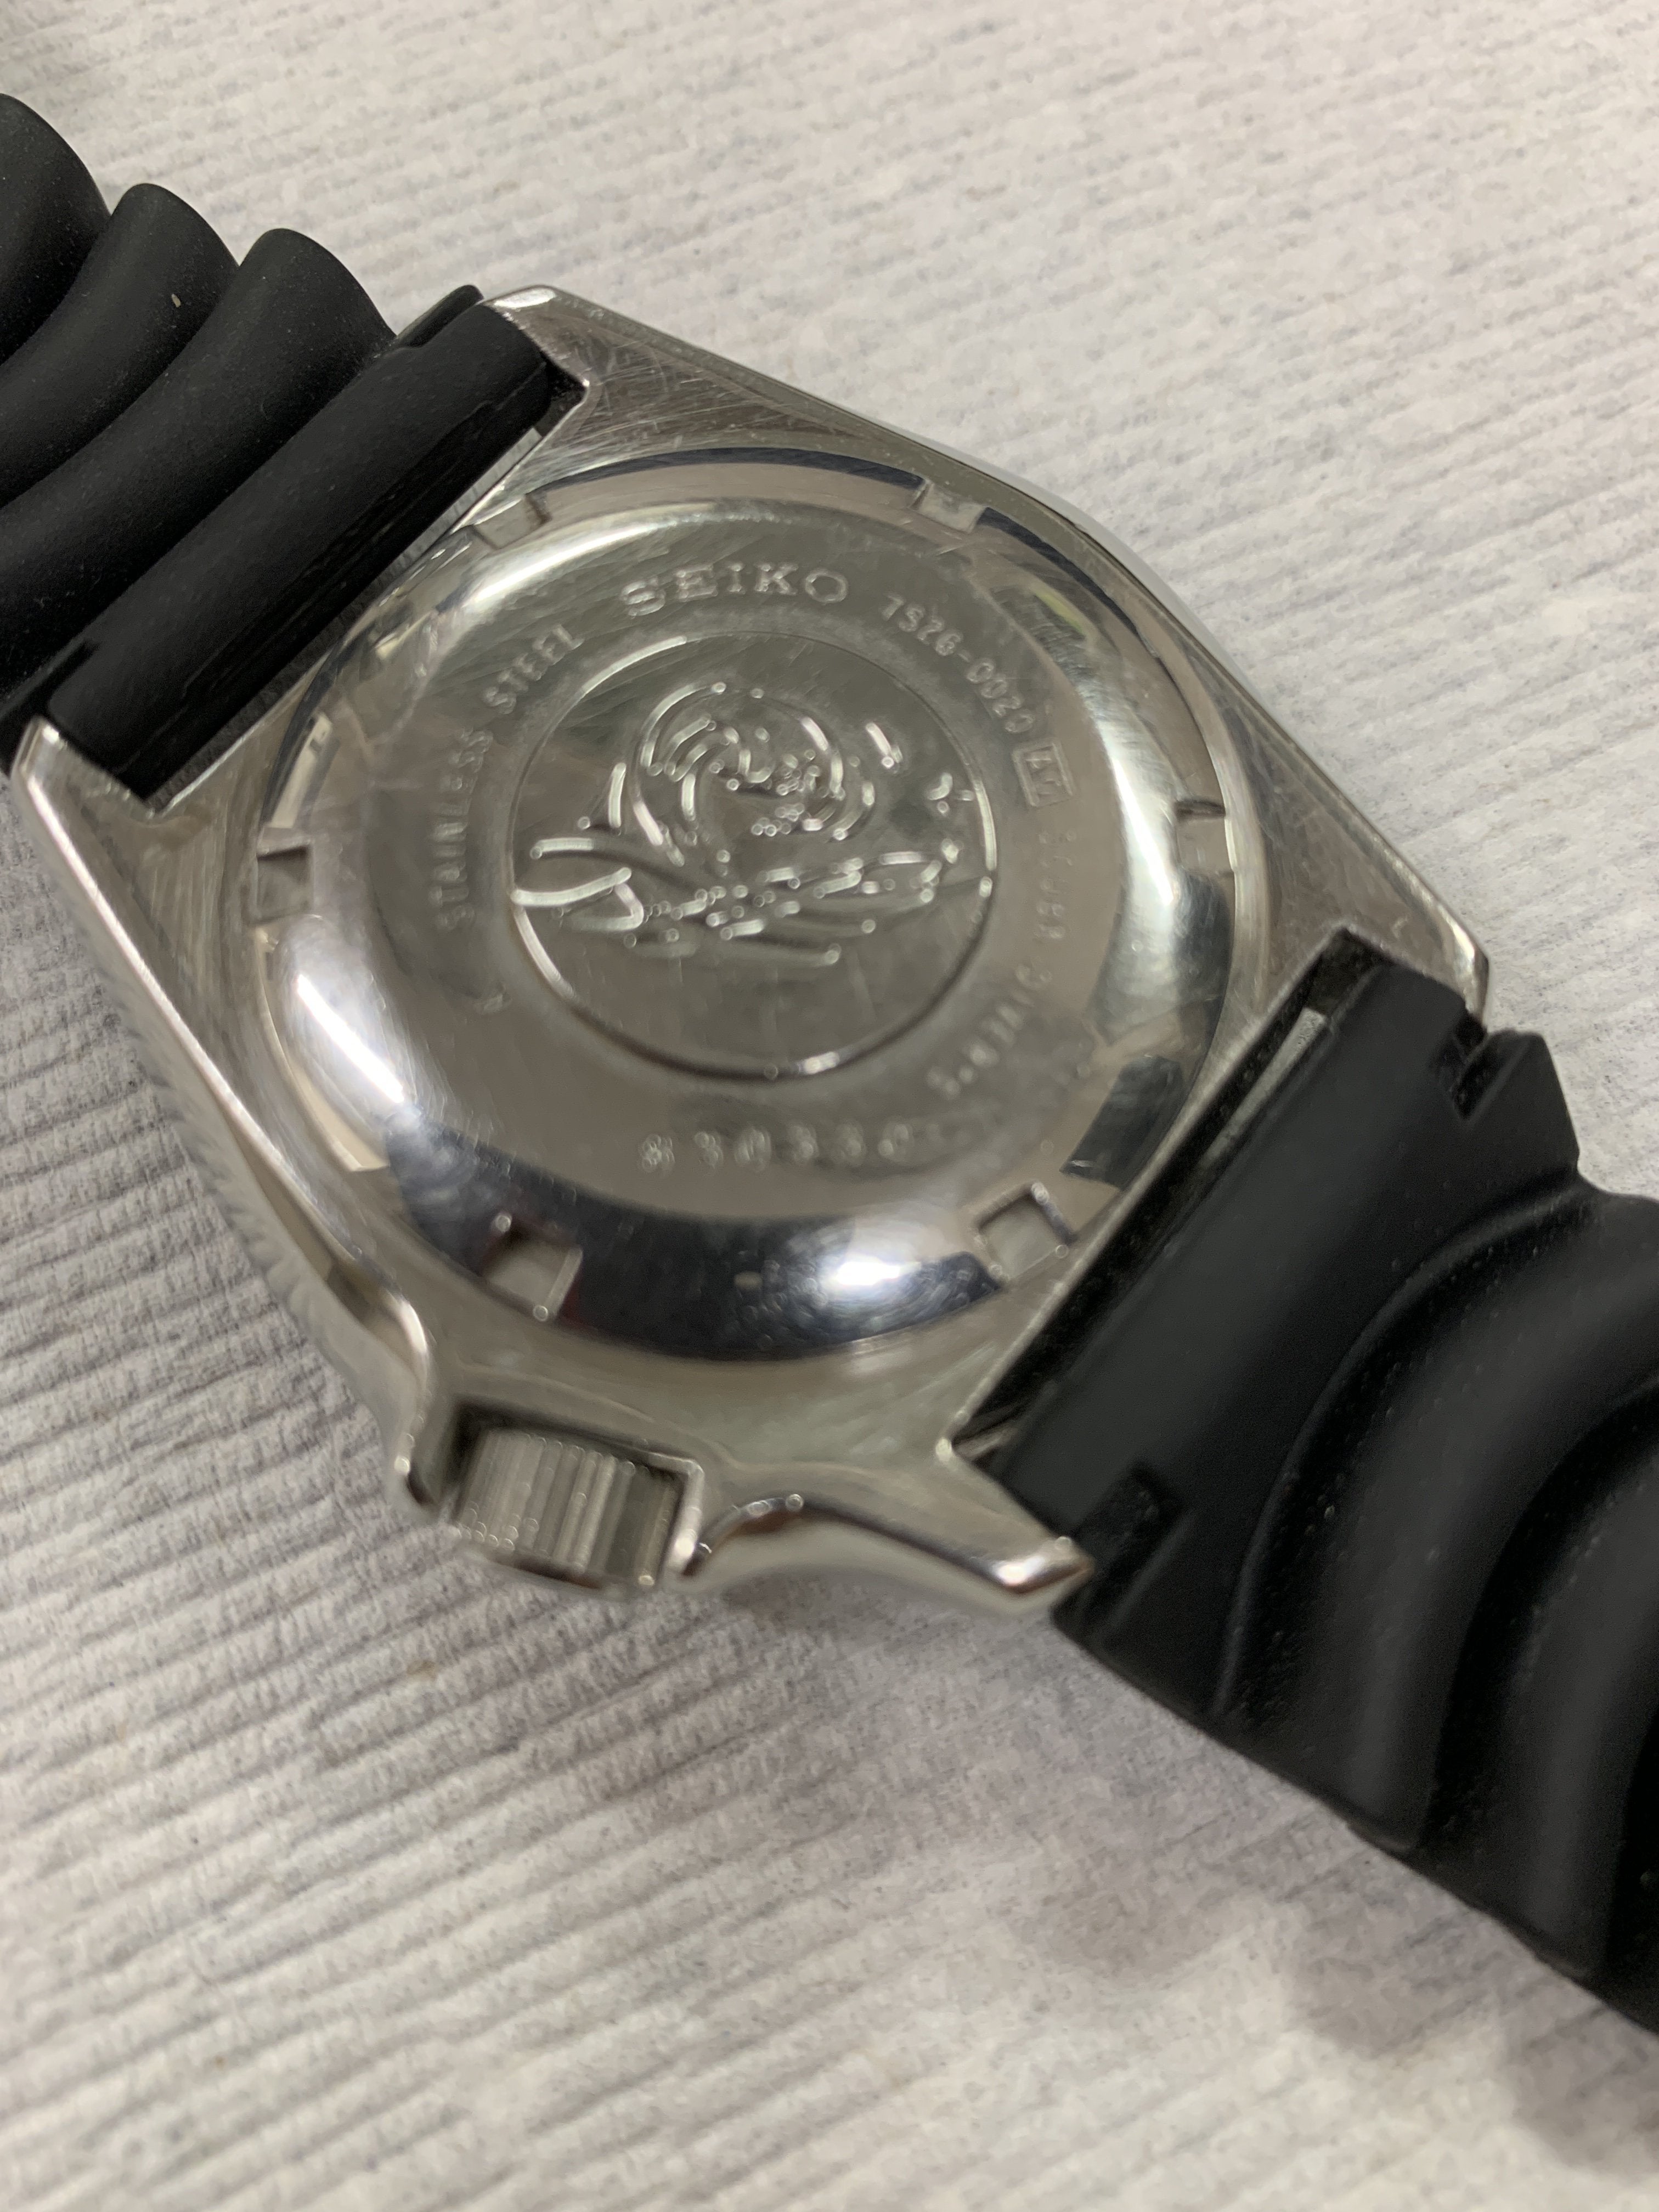 Seiko SKX 399 | WatchUSeek Watch Forums